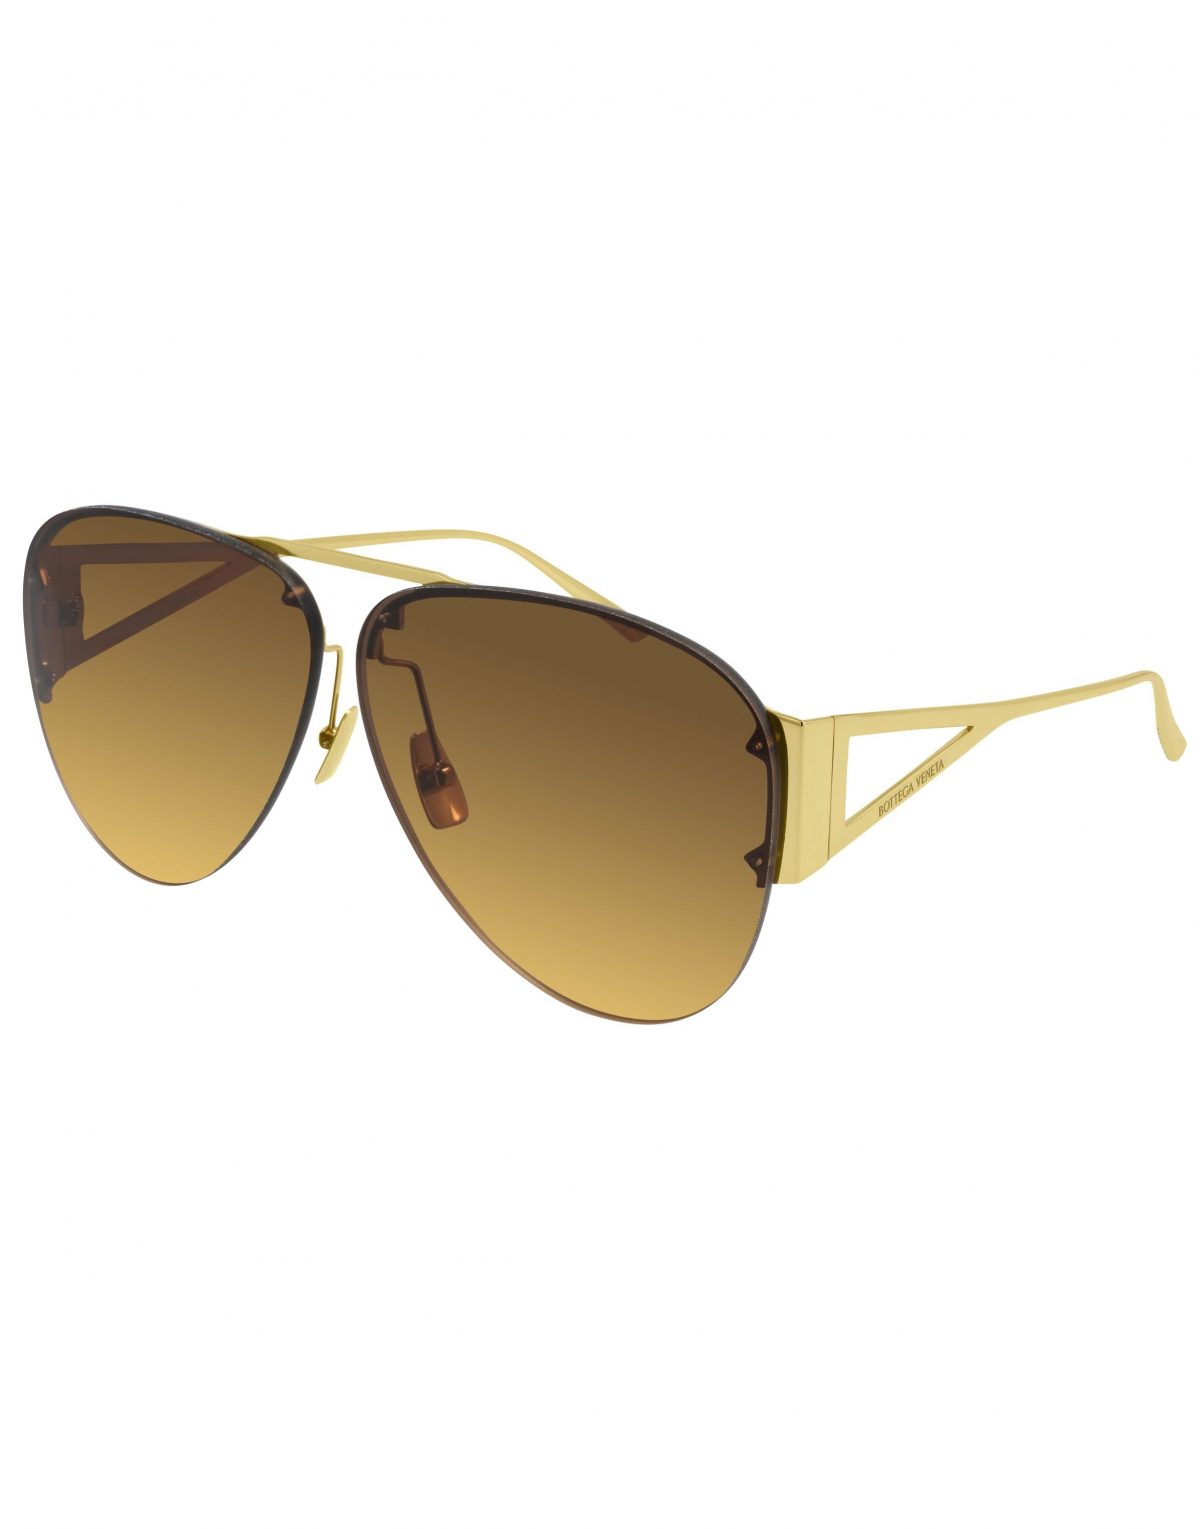 BOTTEGA VENETA The Bottega Veneta Sunglasses (BV1066S 002 65) features a gold frame and orange lenses.65 - 140 - 8